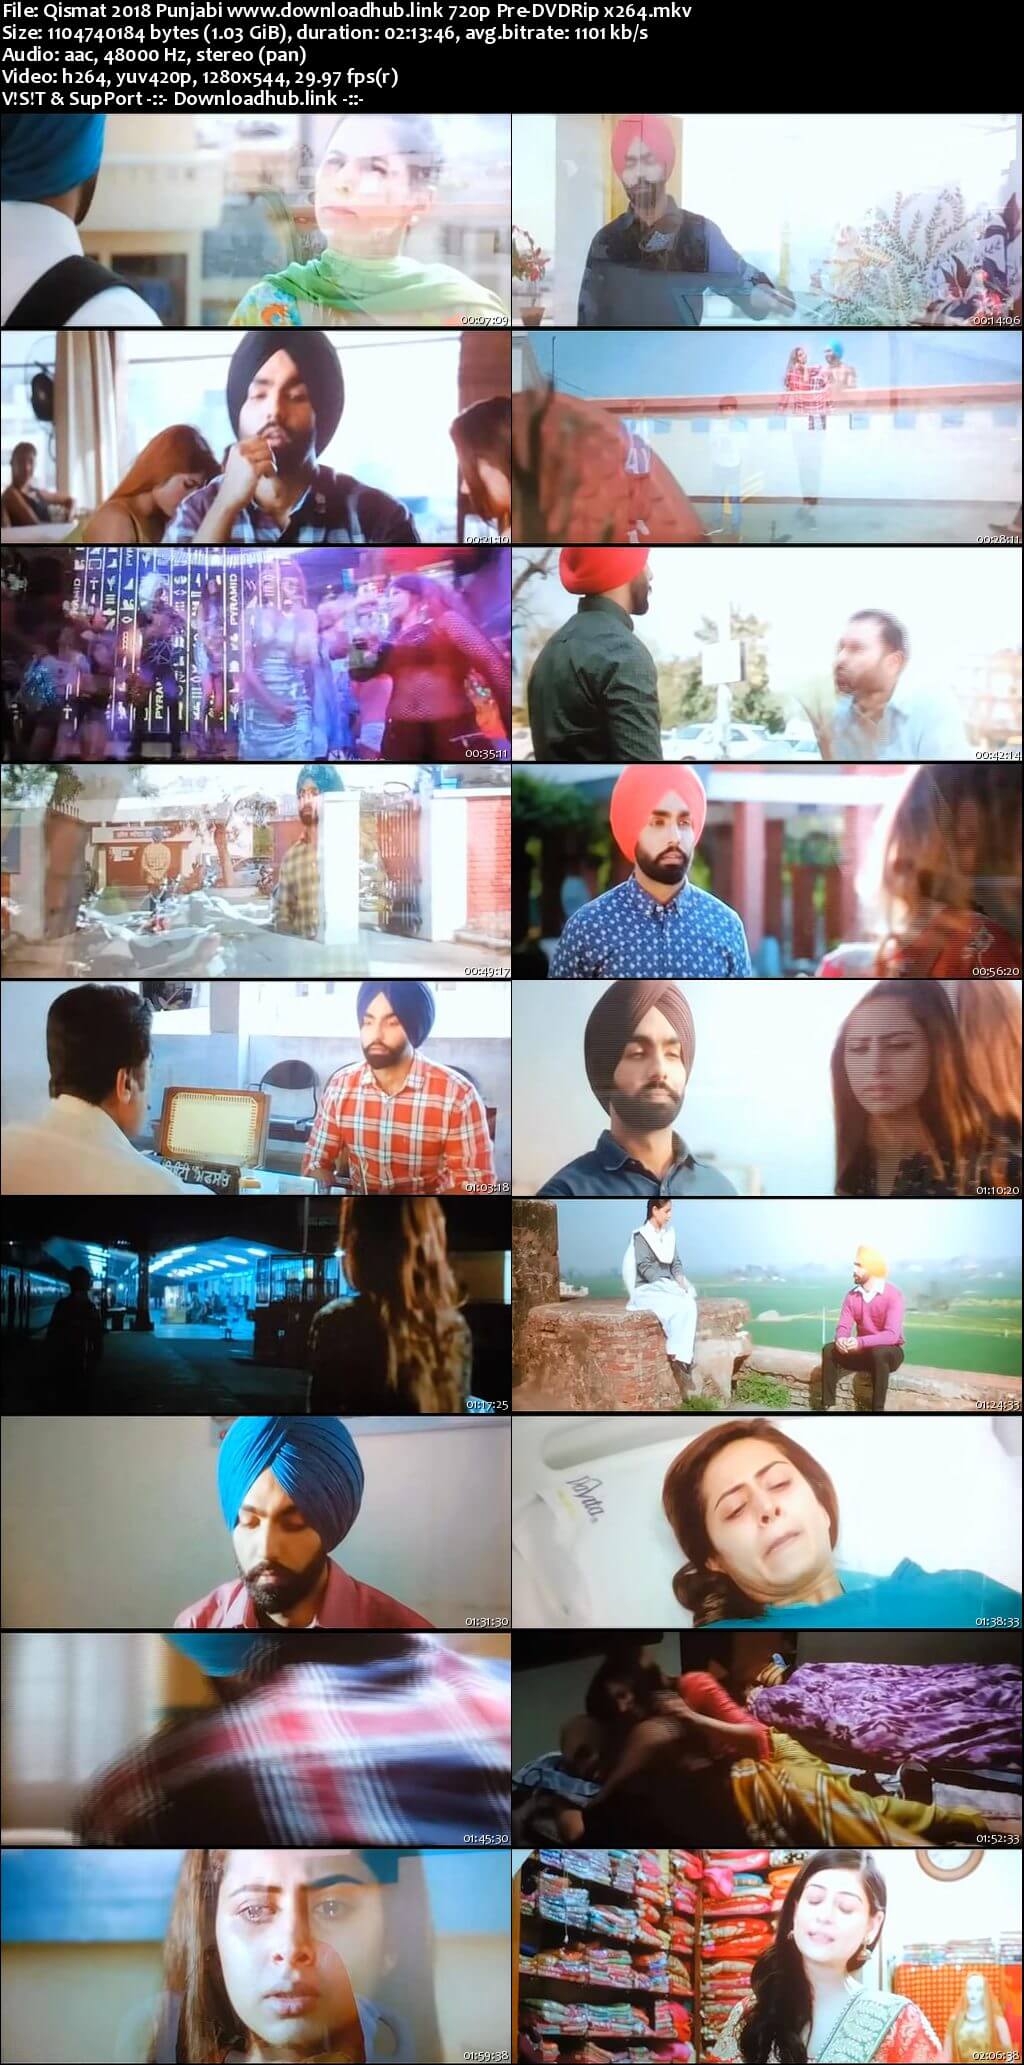 Qismat 2018 Punjabi 720p Pre-DVDRip x264